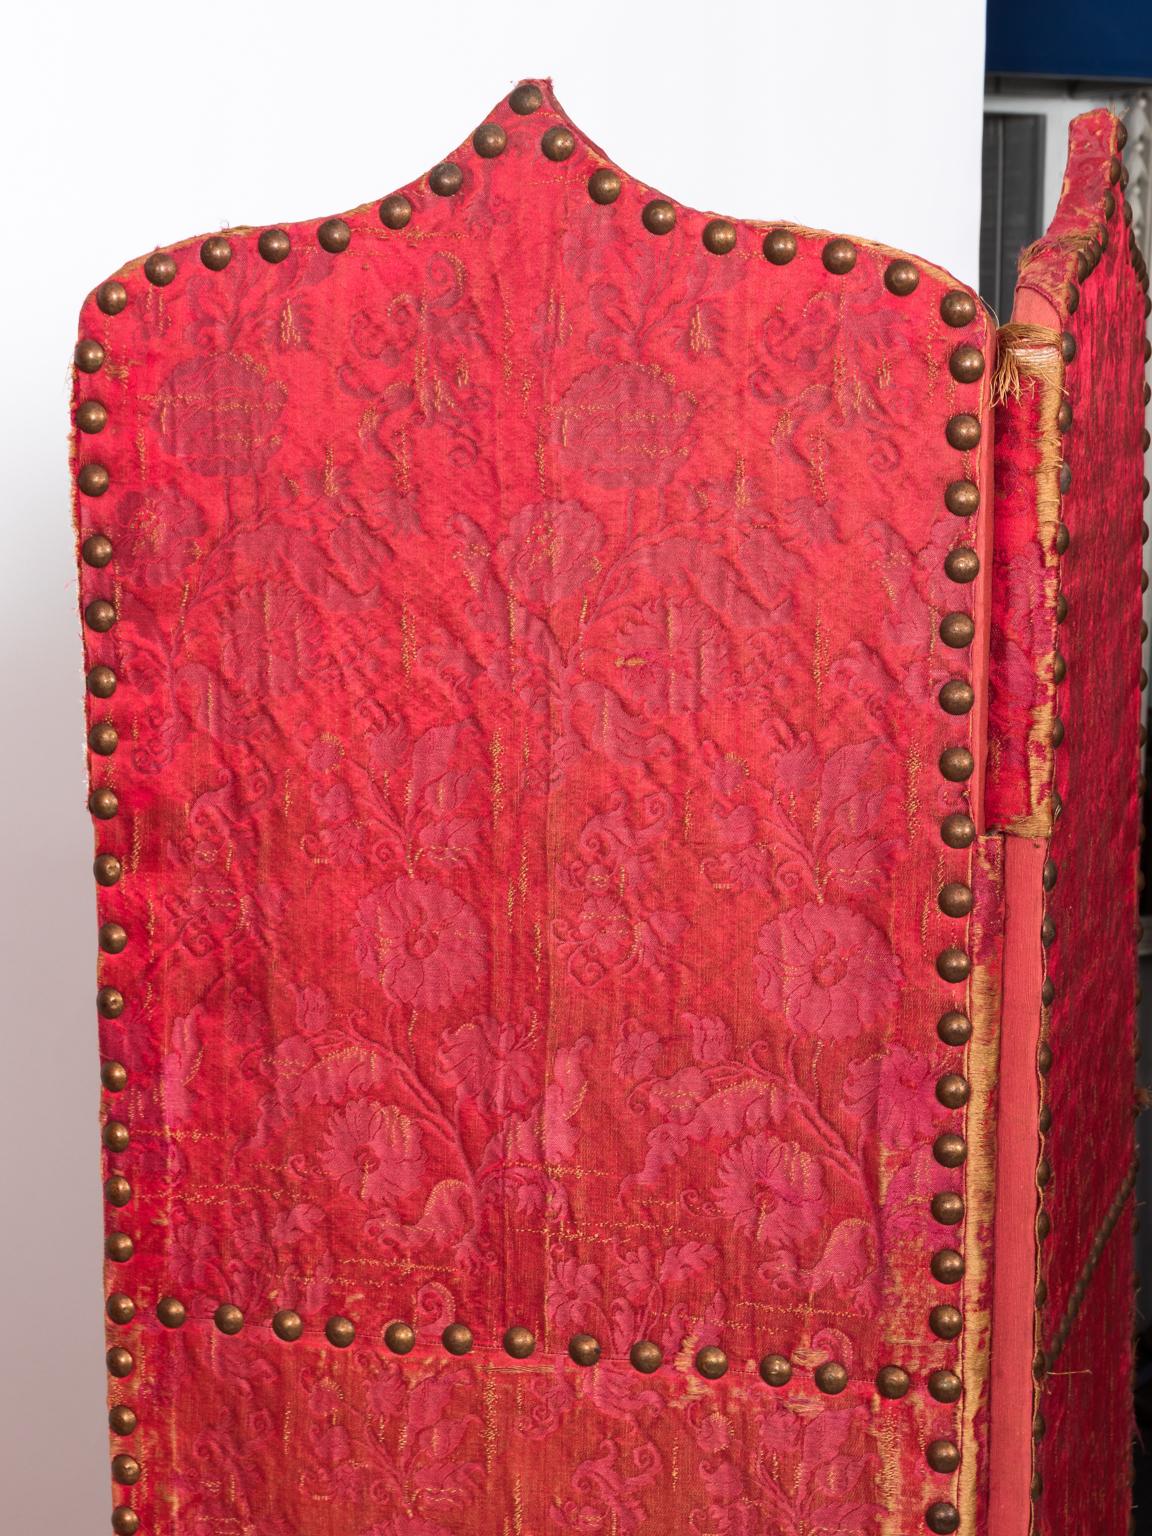 Pair of Early 19th Century Silk Moorish Style Screens For Sale 12